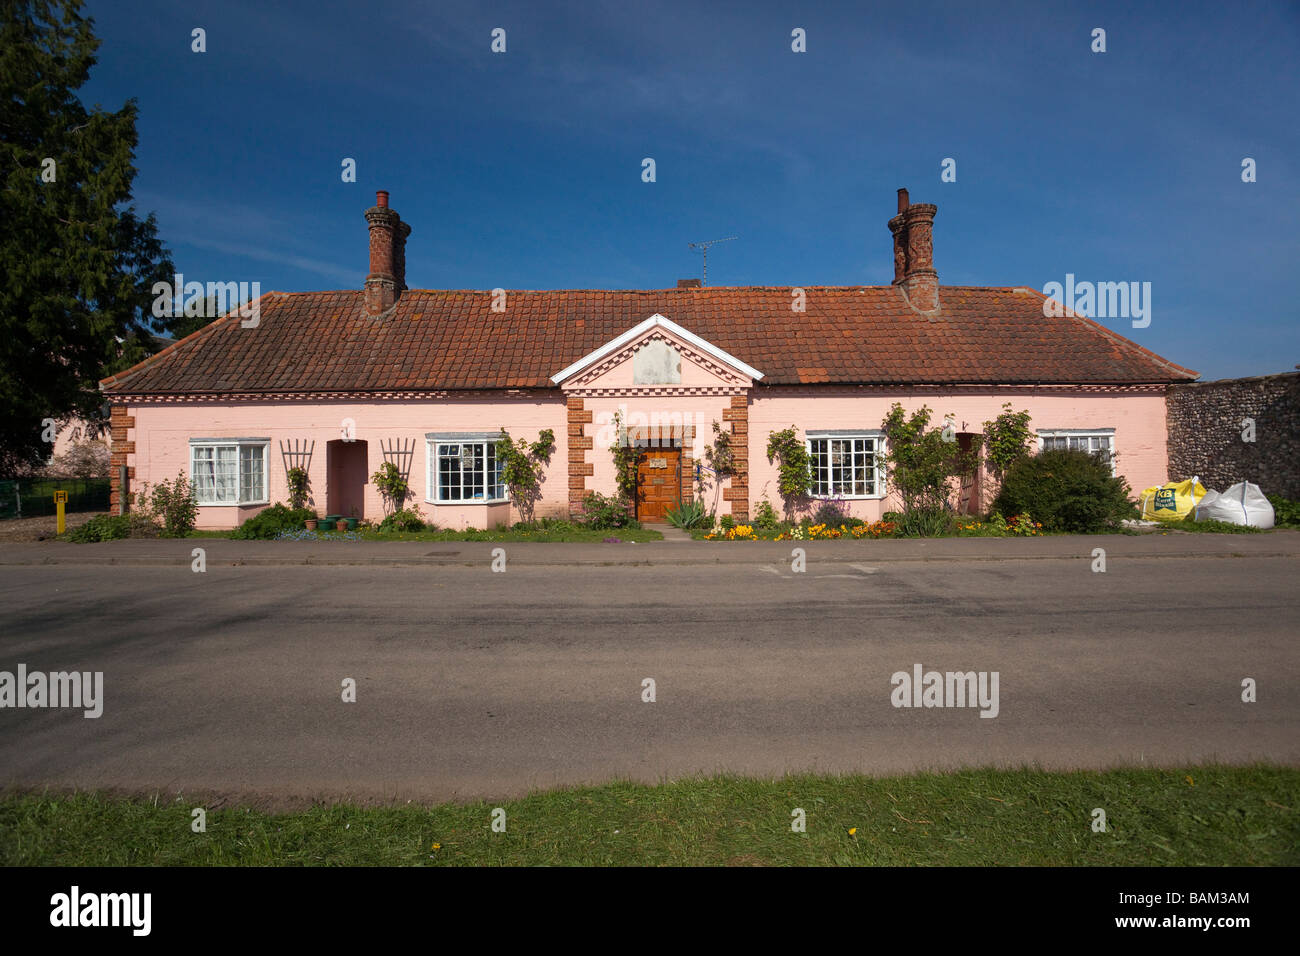 Armenhaus / Alms Häuser in Ampton, Suffolk, UK Stockfoto